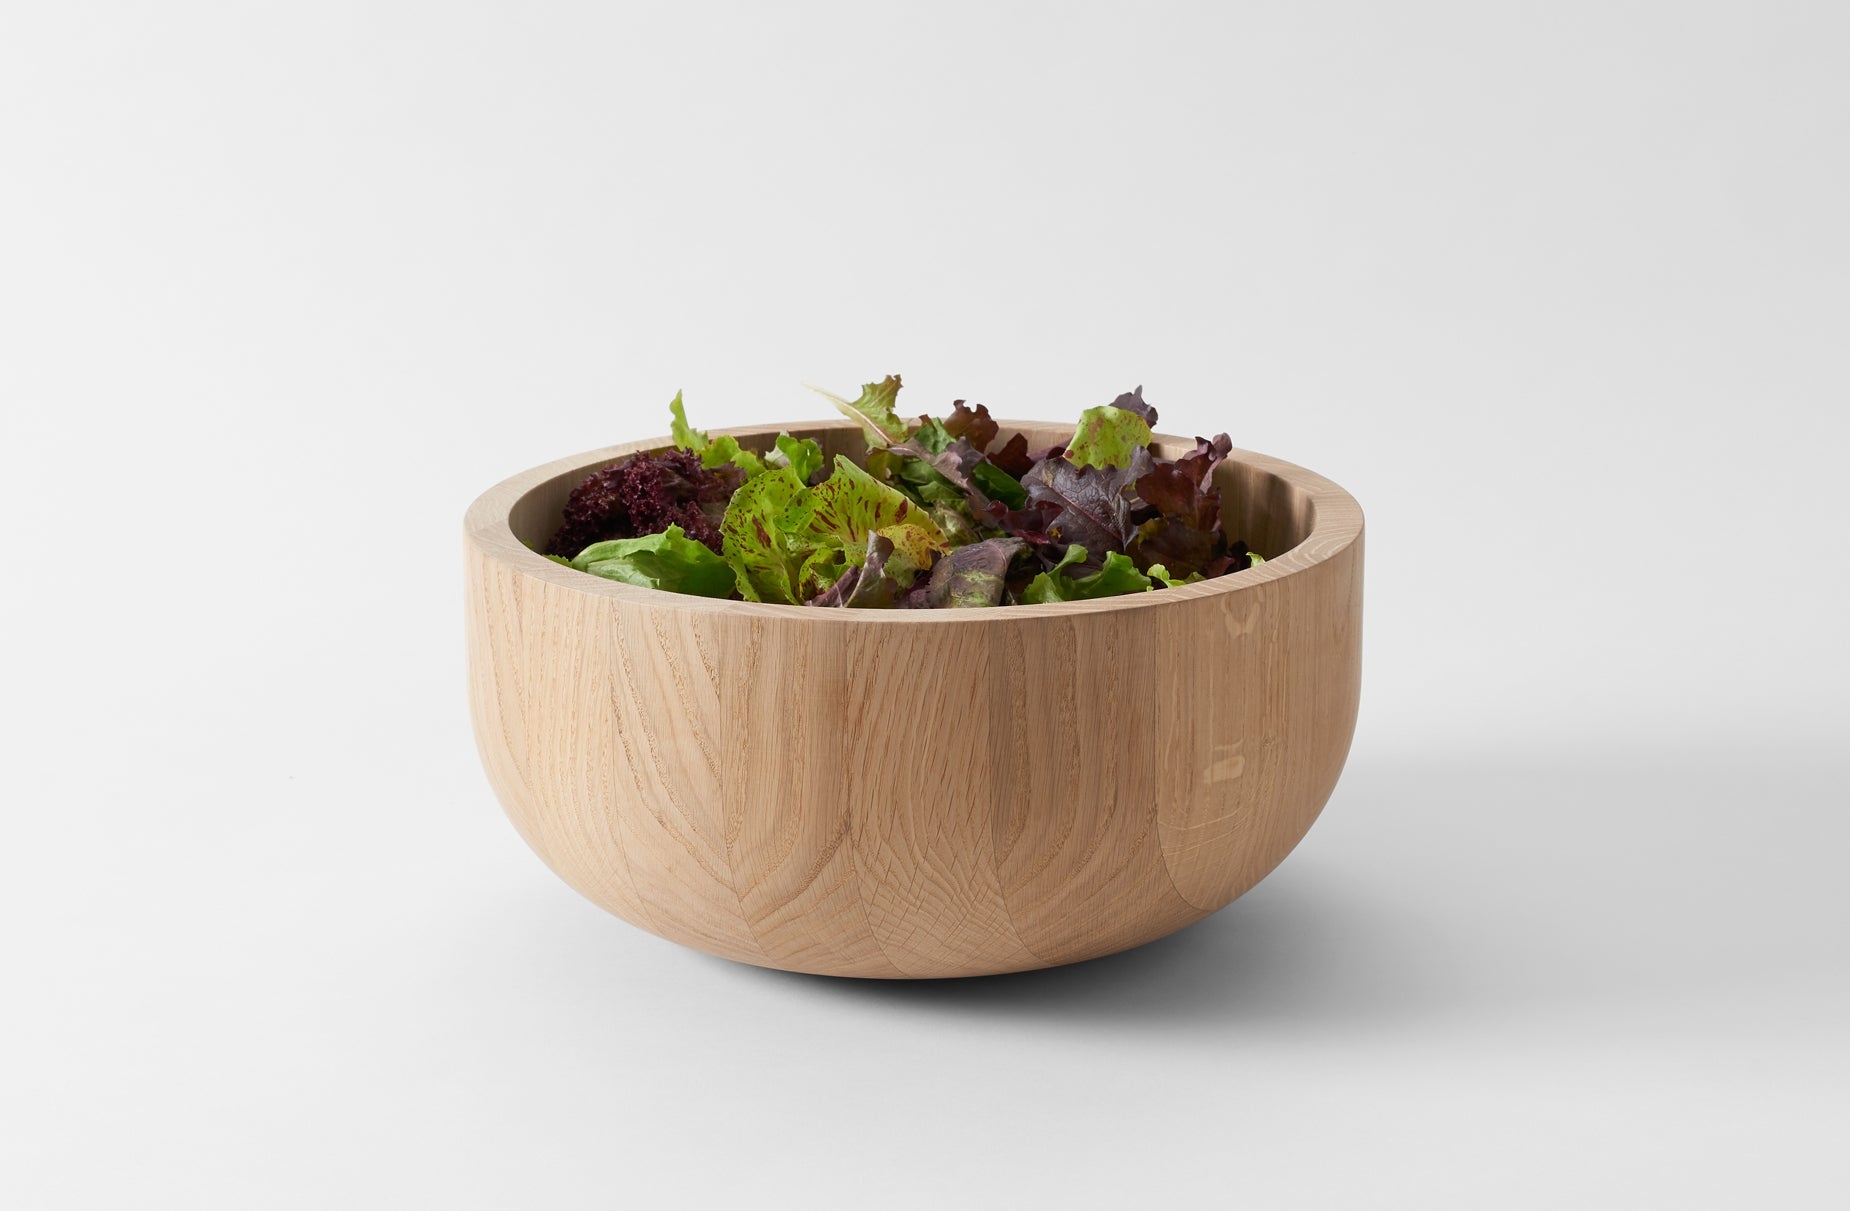 Grab & Go Family Size Garden Salad Bowl Kit, 25 oz - Fred Meyer